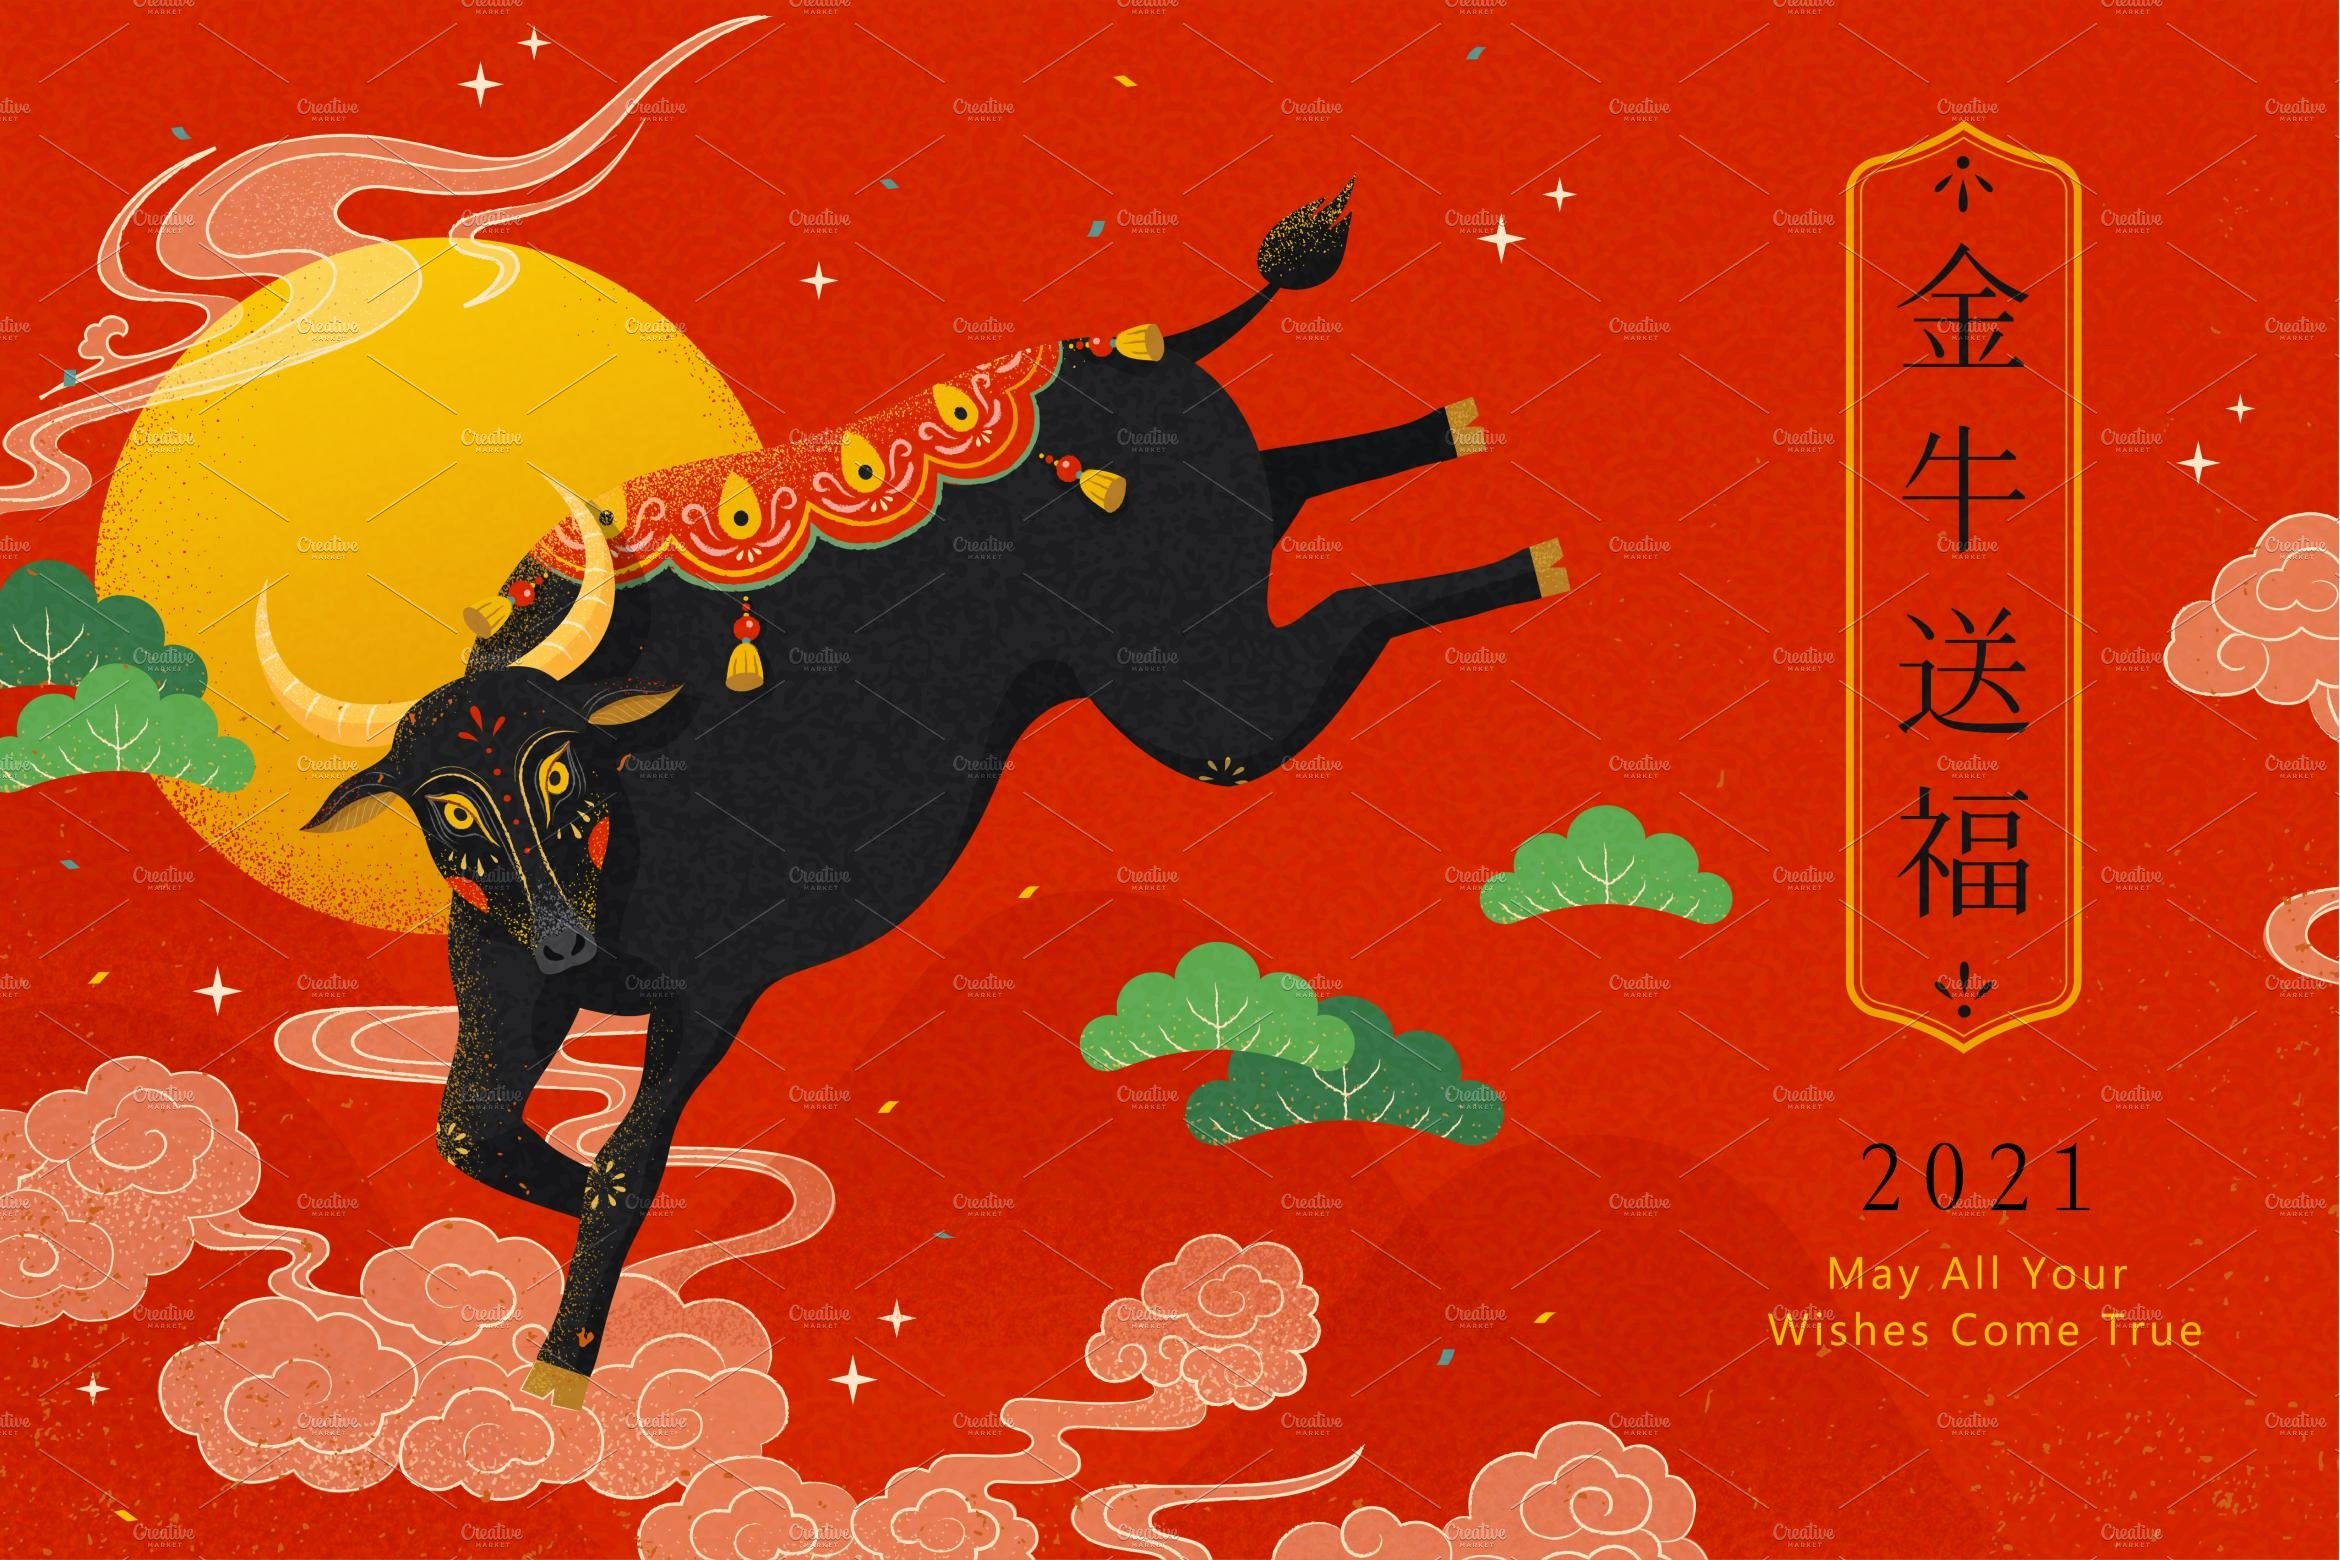 2021 CNY year of ox celebration cover image.